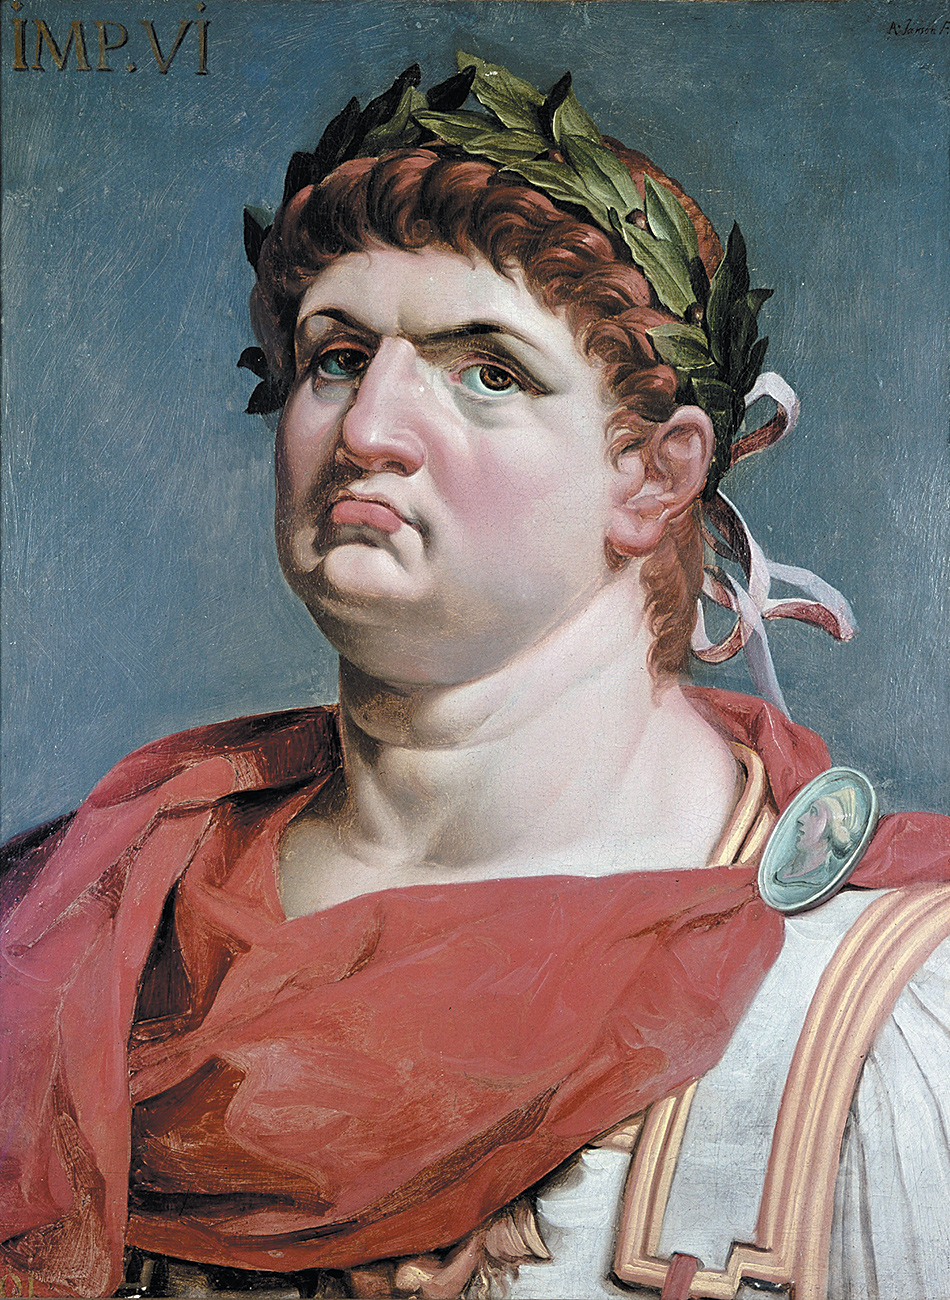 Emperor Nero; painting by Abraham Janssens, 1618